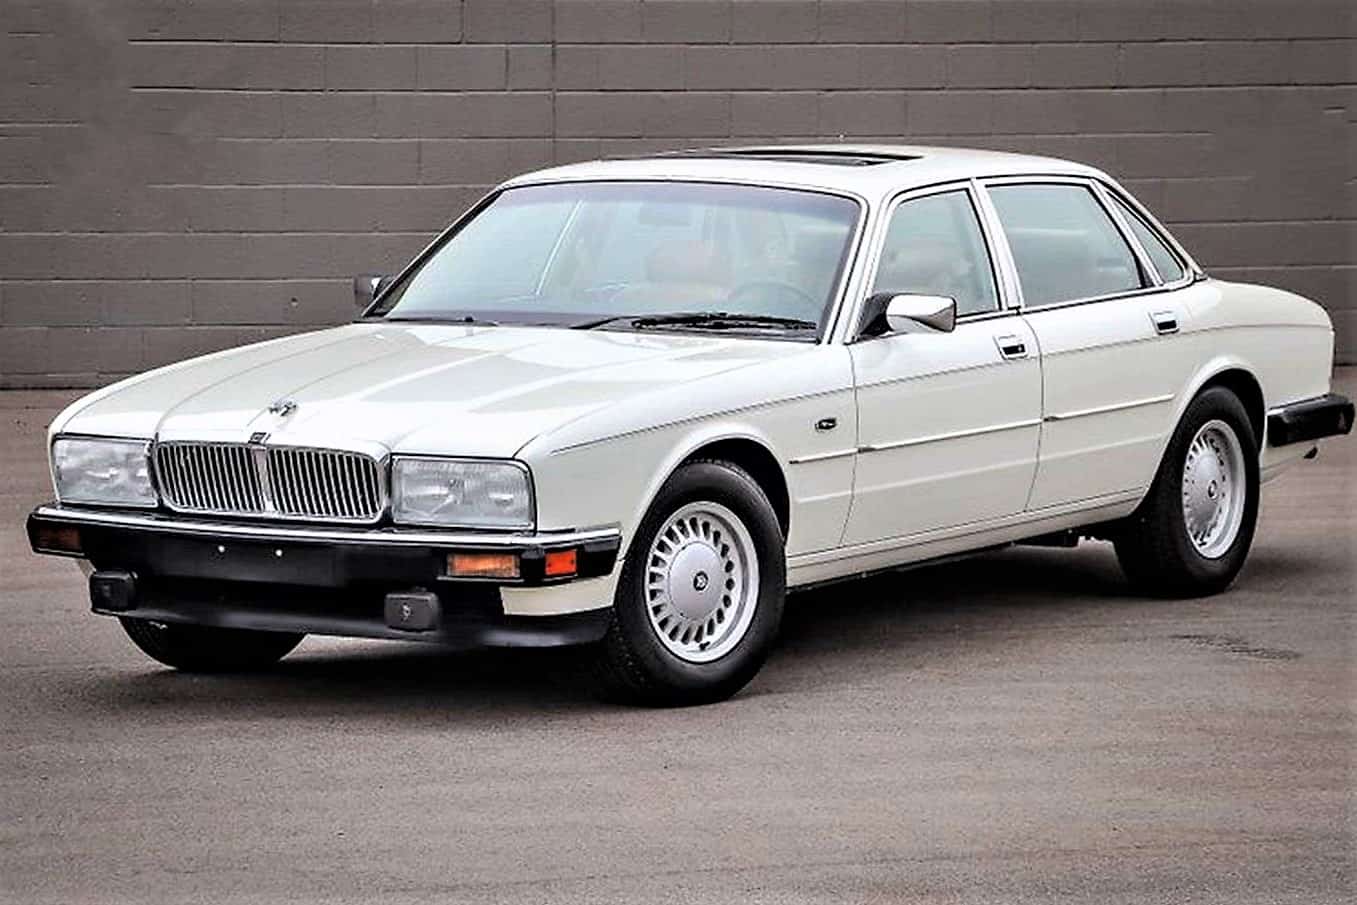 Pick of the Day: 1991 Jaguar XJ6 Sovereign low-priced luxury sedan